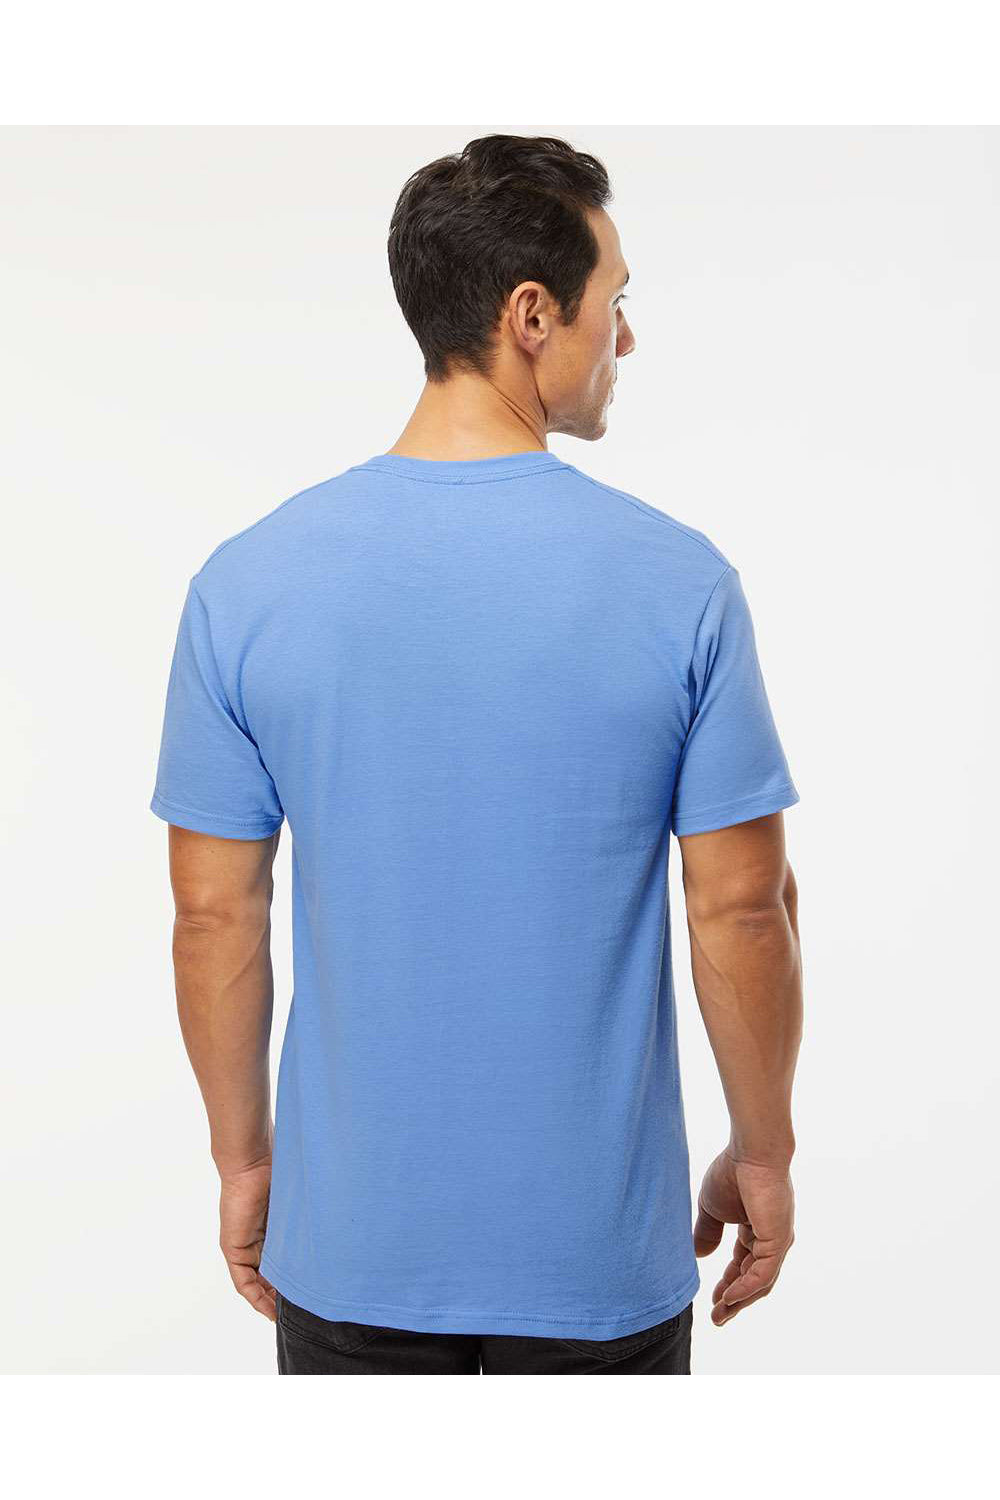 M&O 4800 Mens Gold Soft Touch Short Sleeve Crewneck T-Shirt Carolina Blue Model Back